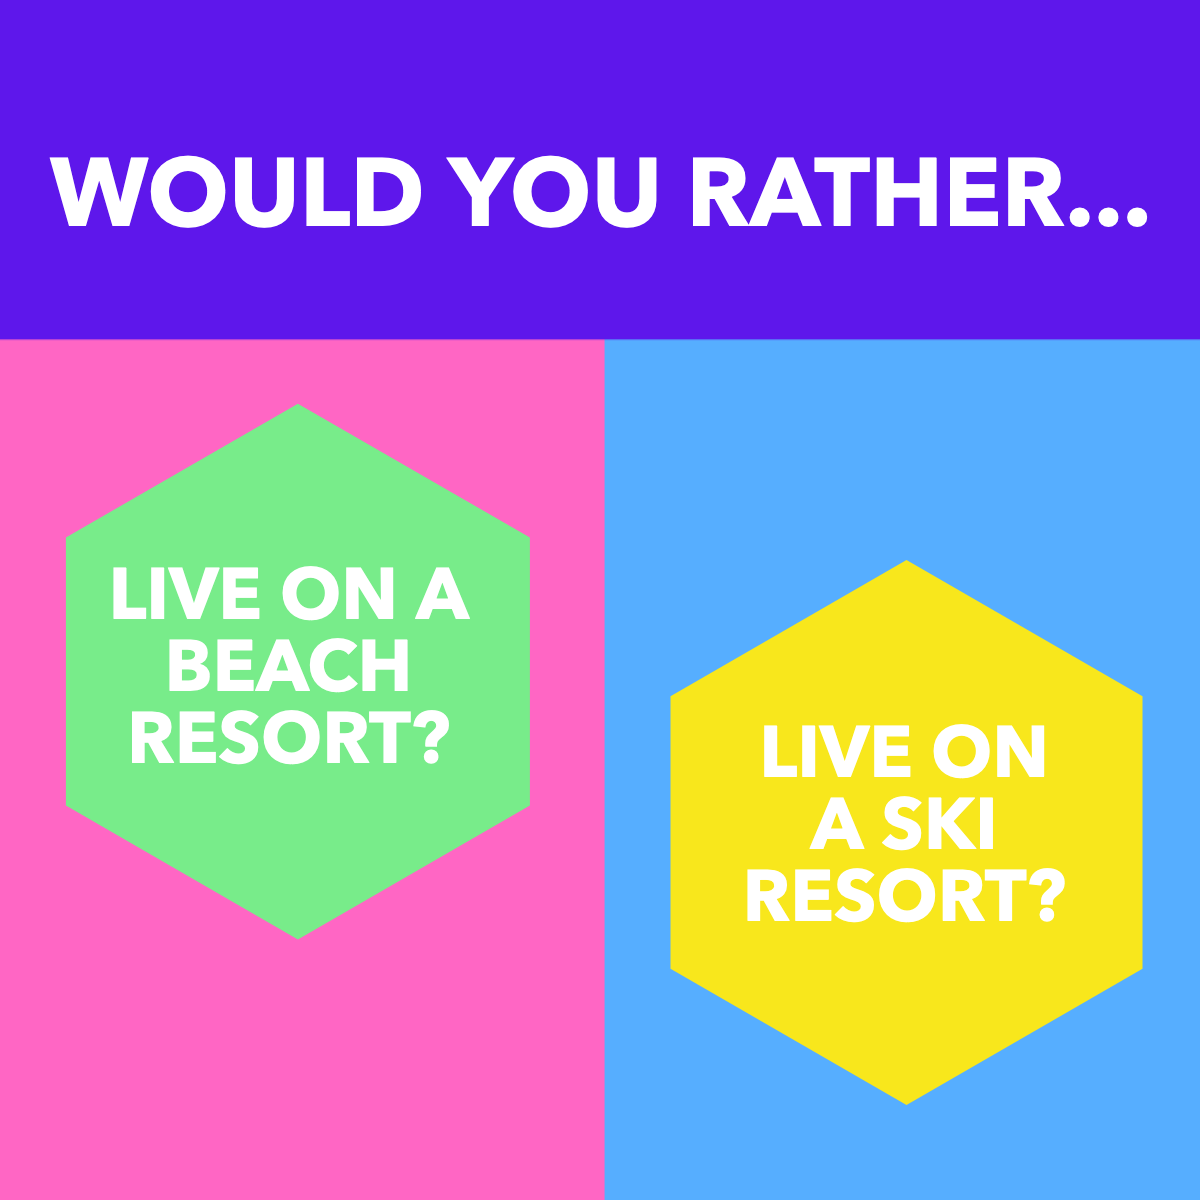 Would you rather... 

🏖️☀️ vs. 🏔️⛷️

#wouldyourather    #beach    #tannned    #sun    #snow    #ski    #cozy 
#RacingRealEstateAgent #BarrettRealEstate #StoneTreeRealEstateTeam #maricopaazrealestate #racingagent #arizonarealestate